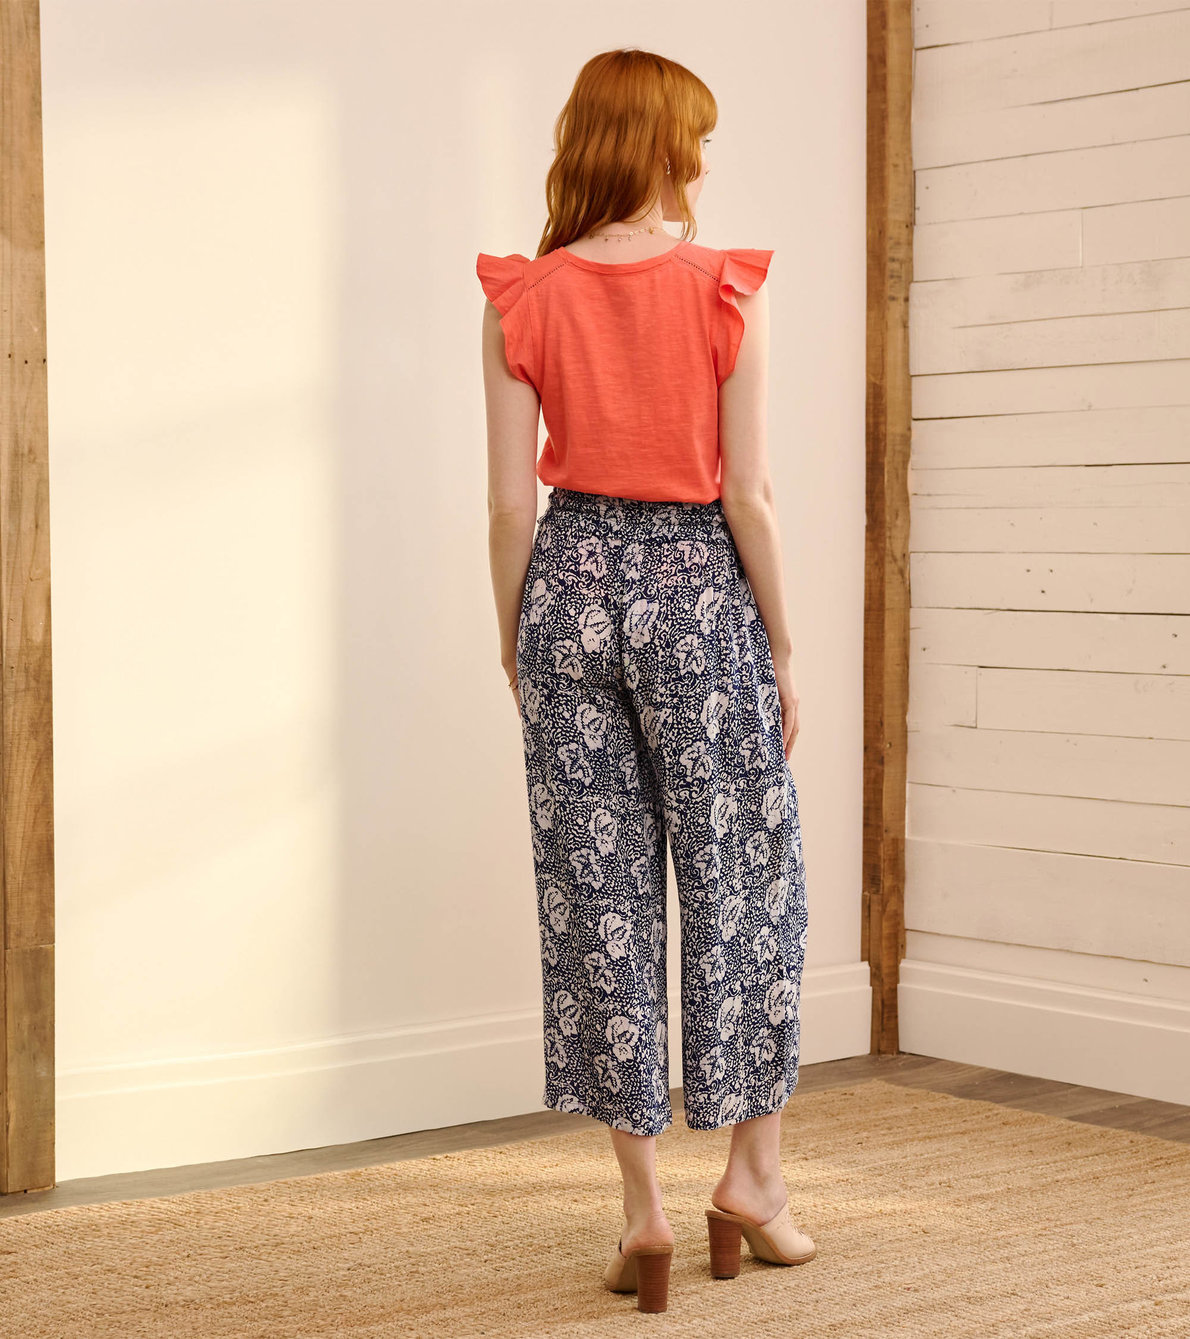 View larger image of Cassie Pants - Floral Shibori